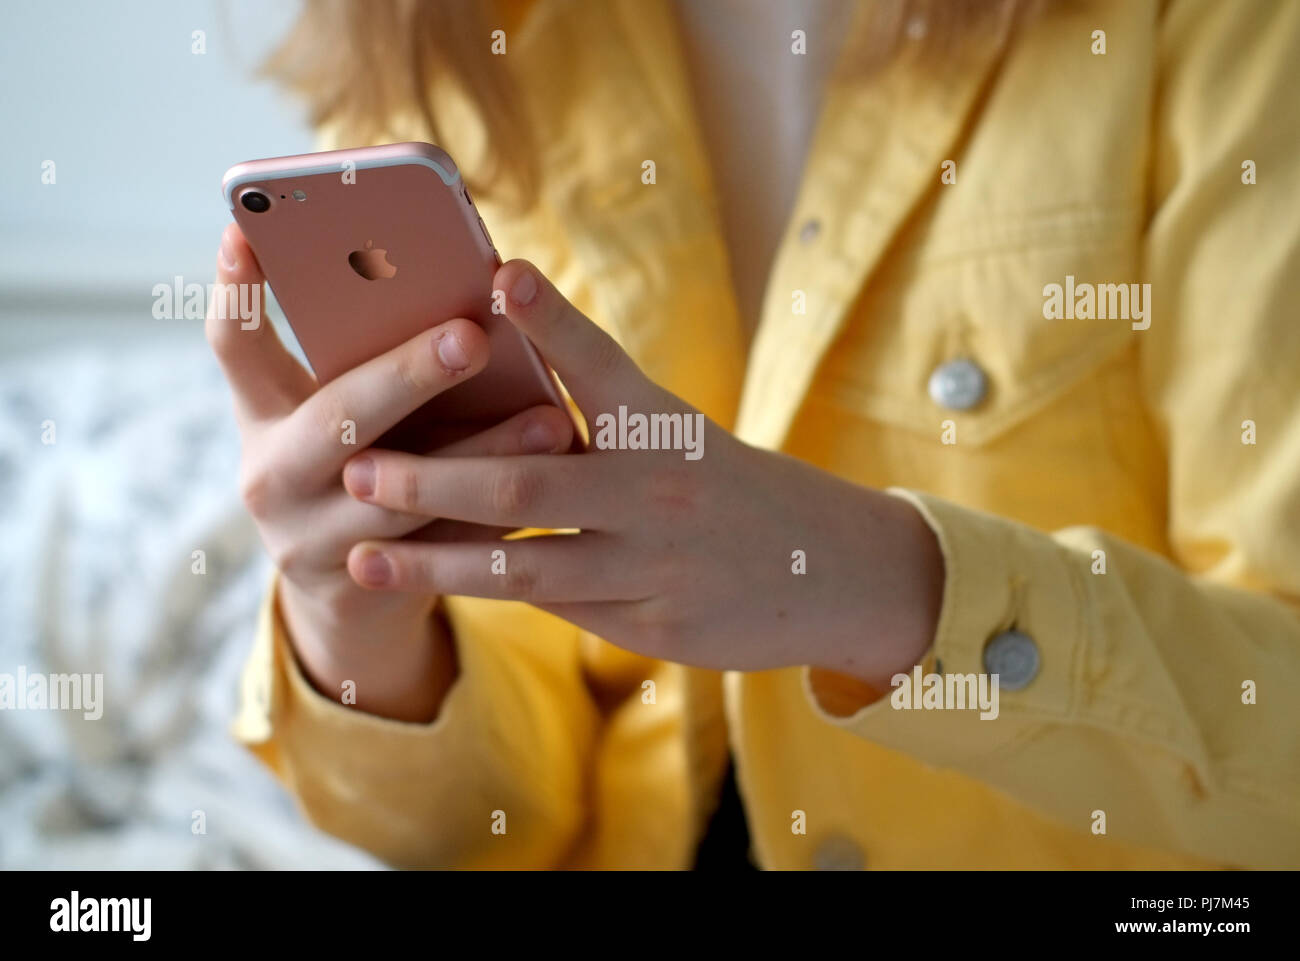 Teen holding iphone 7 using social media Stock Photo